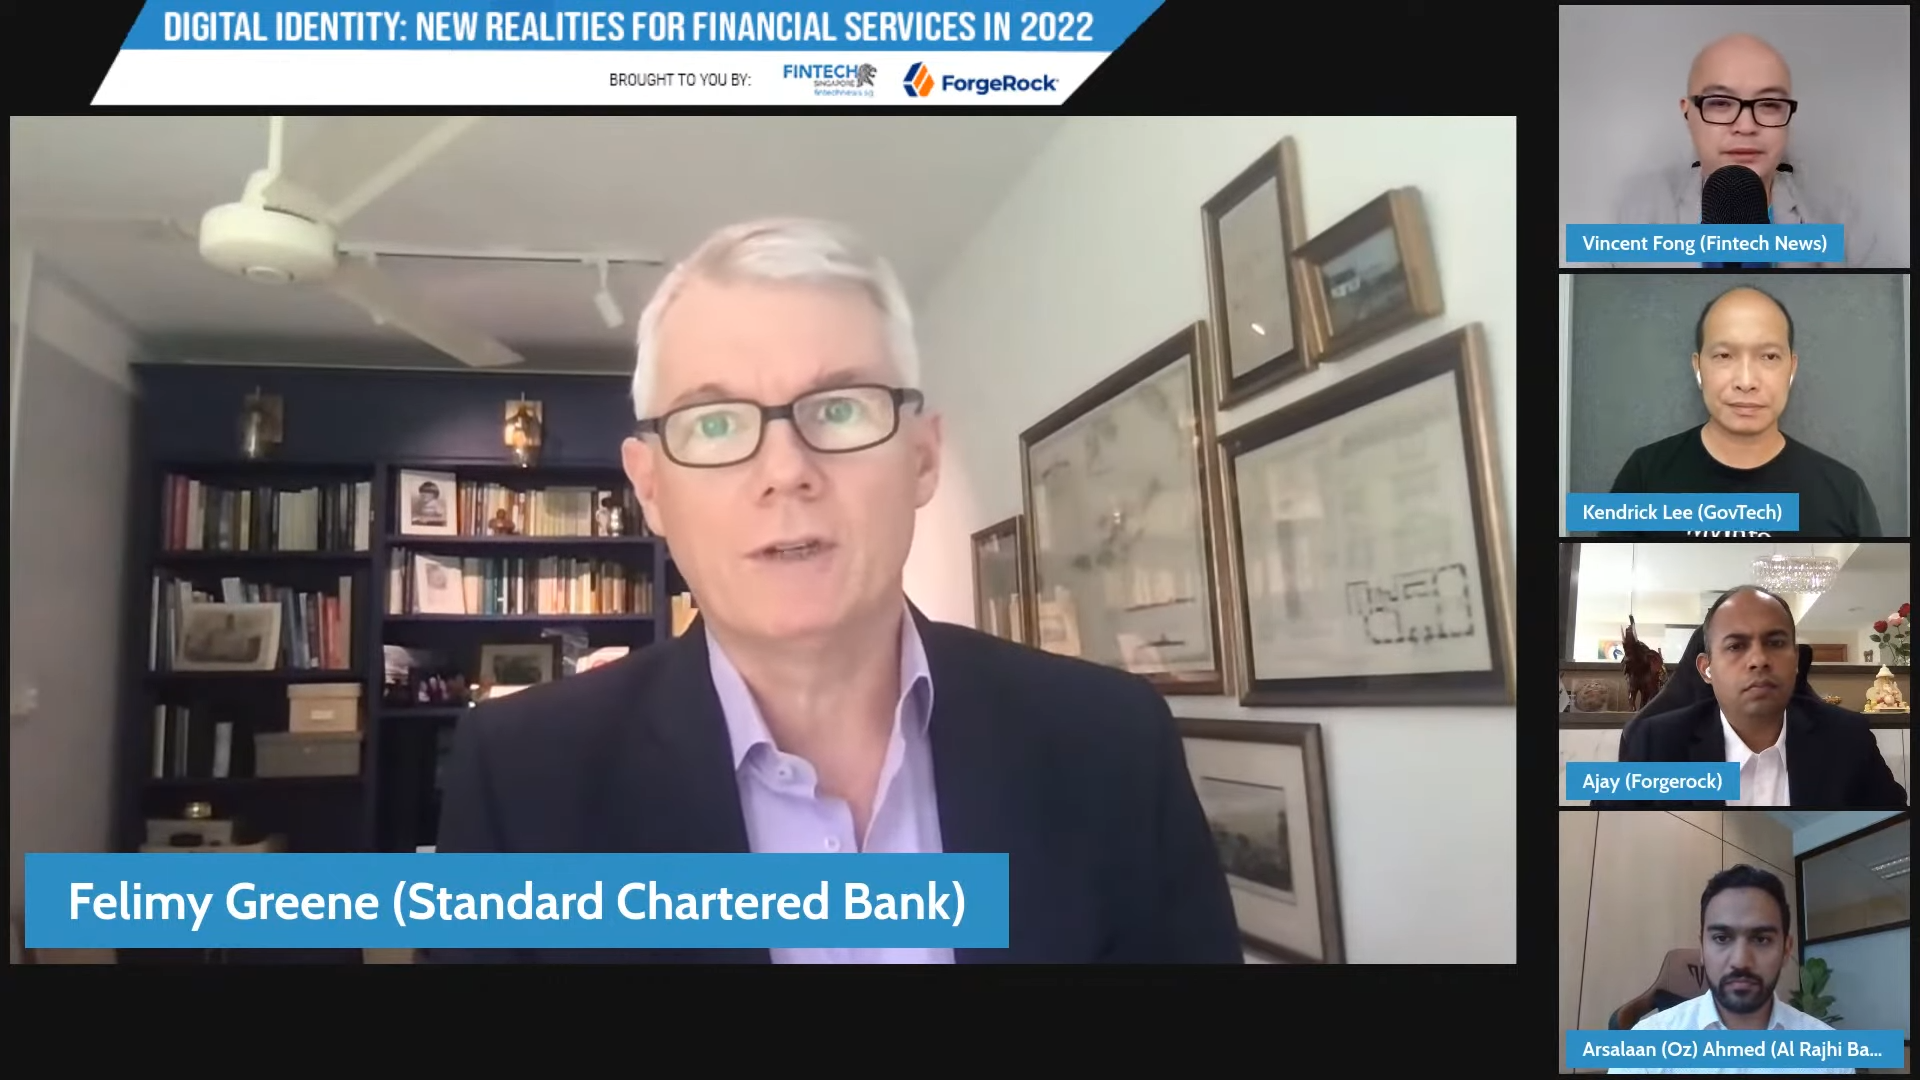 Felimy Greene 氏、COO:Standard Chartered Bank、オンボーディング部門グローバル責任者